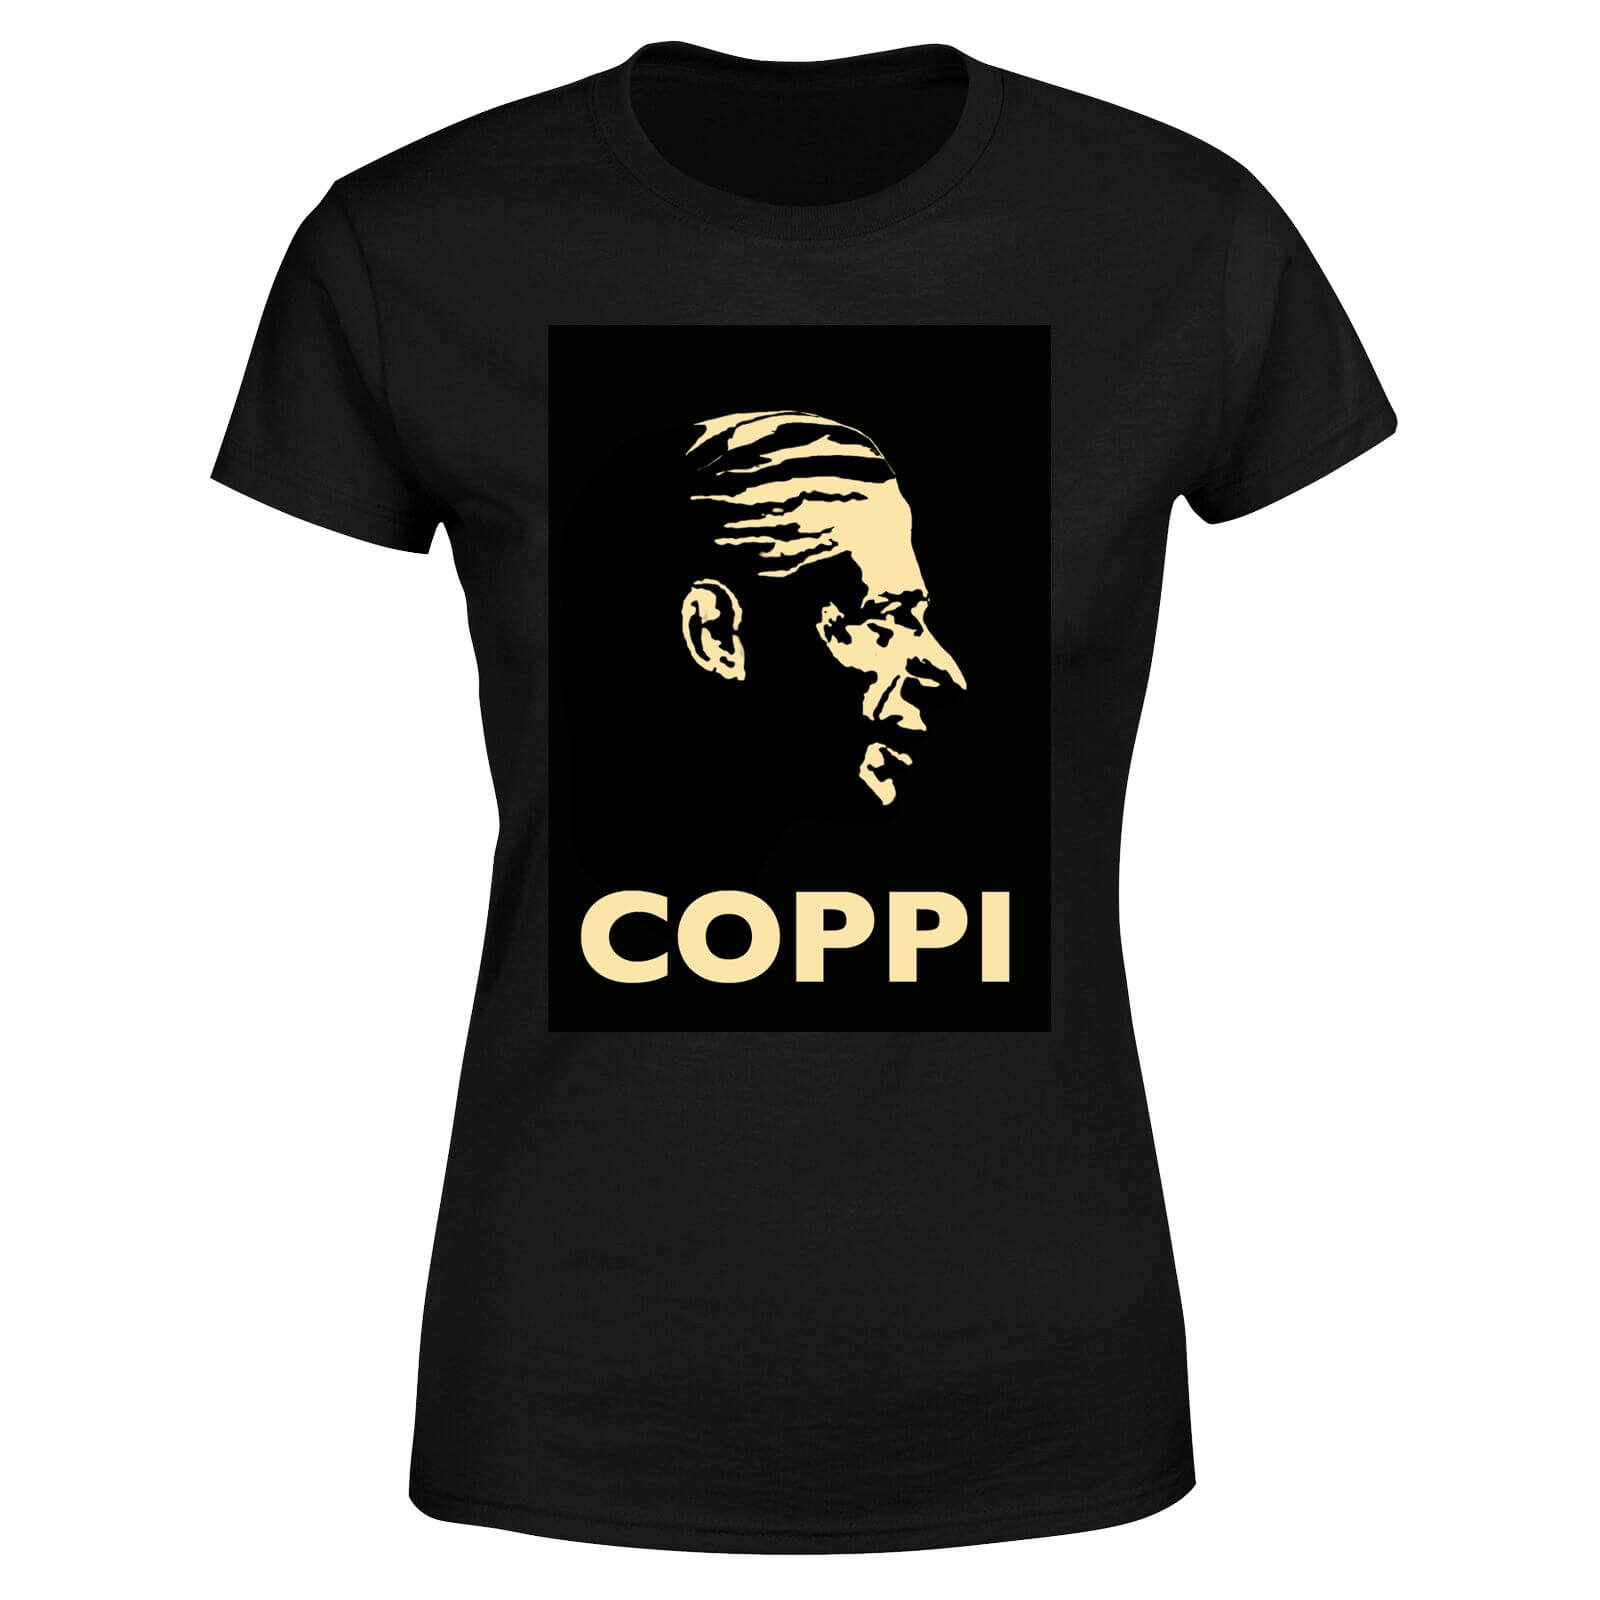 Coppi Women's T-Shirt - Black - XL - Black